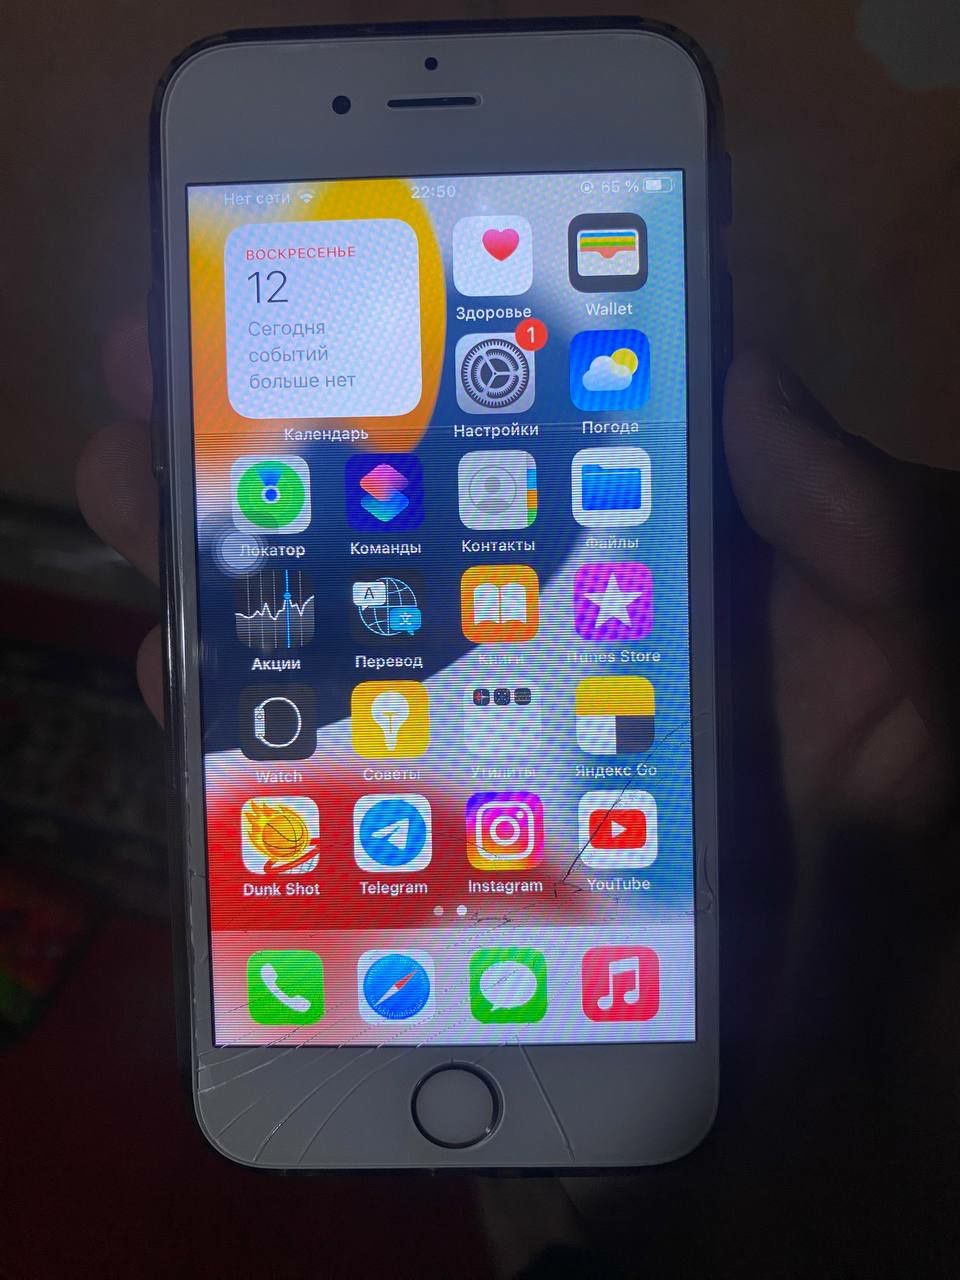 Iphone 6s bor ekran sngan antena cqmid